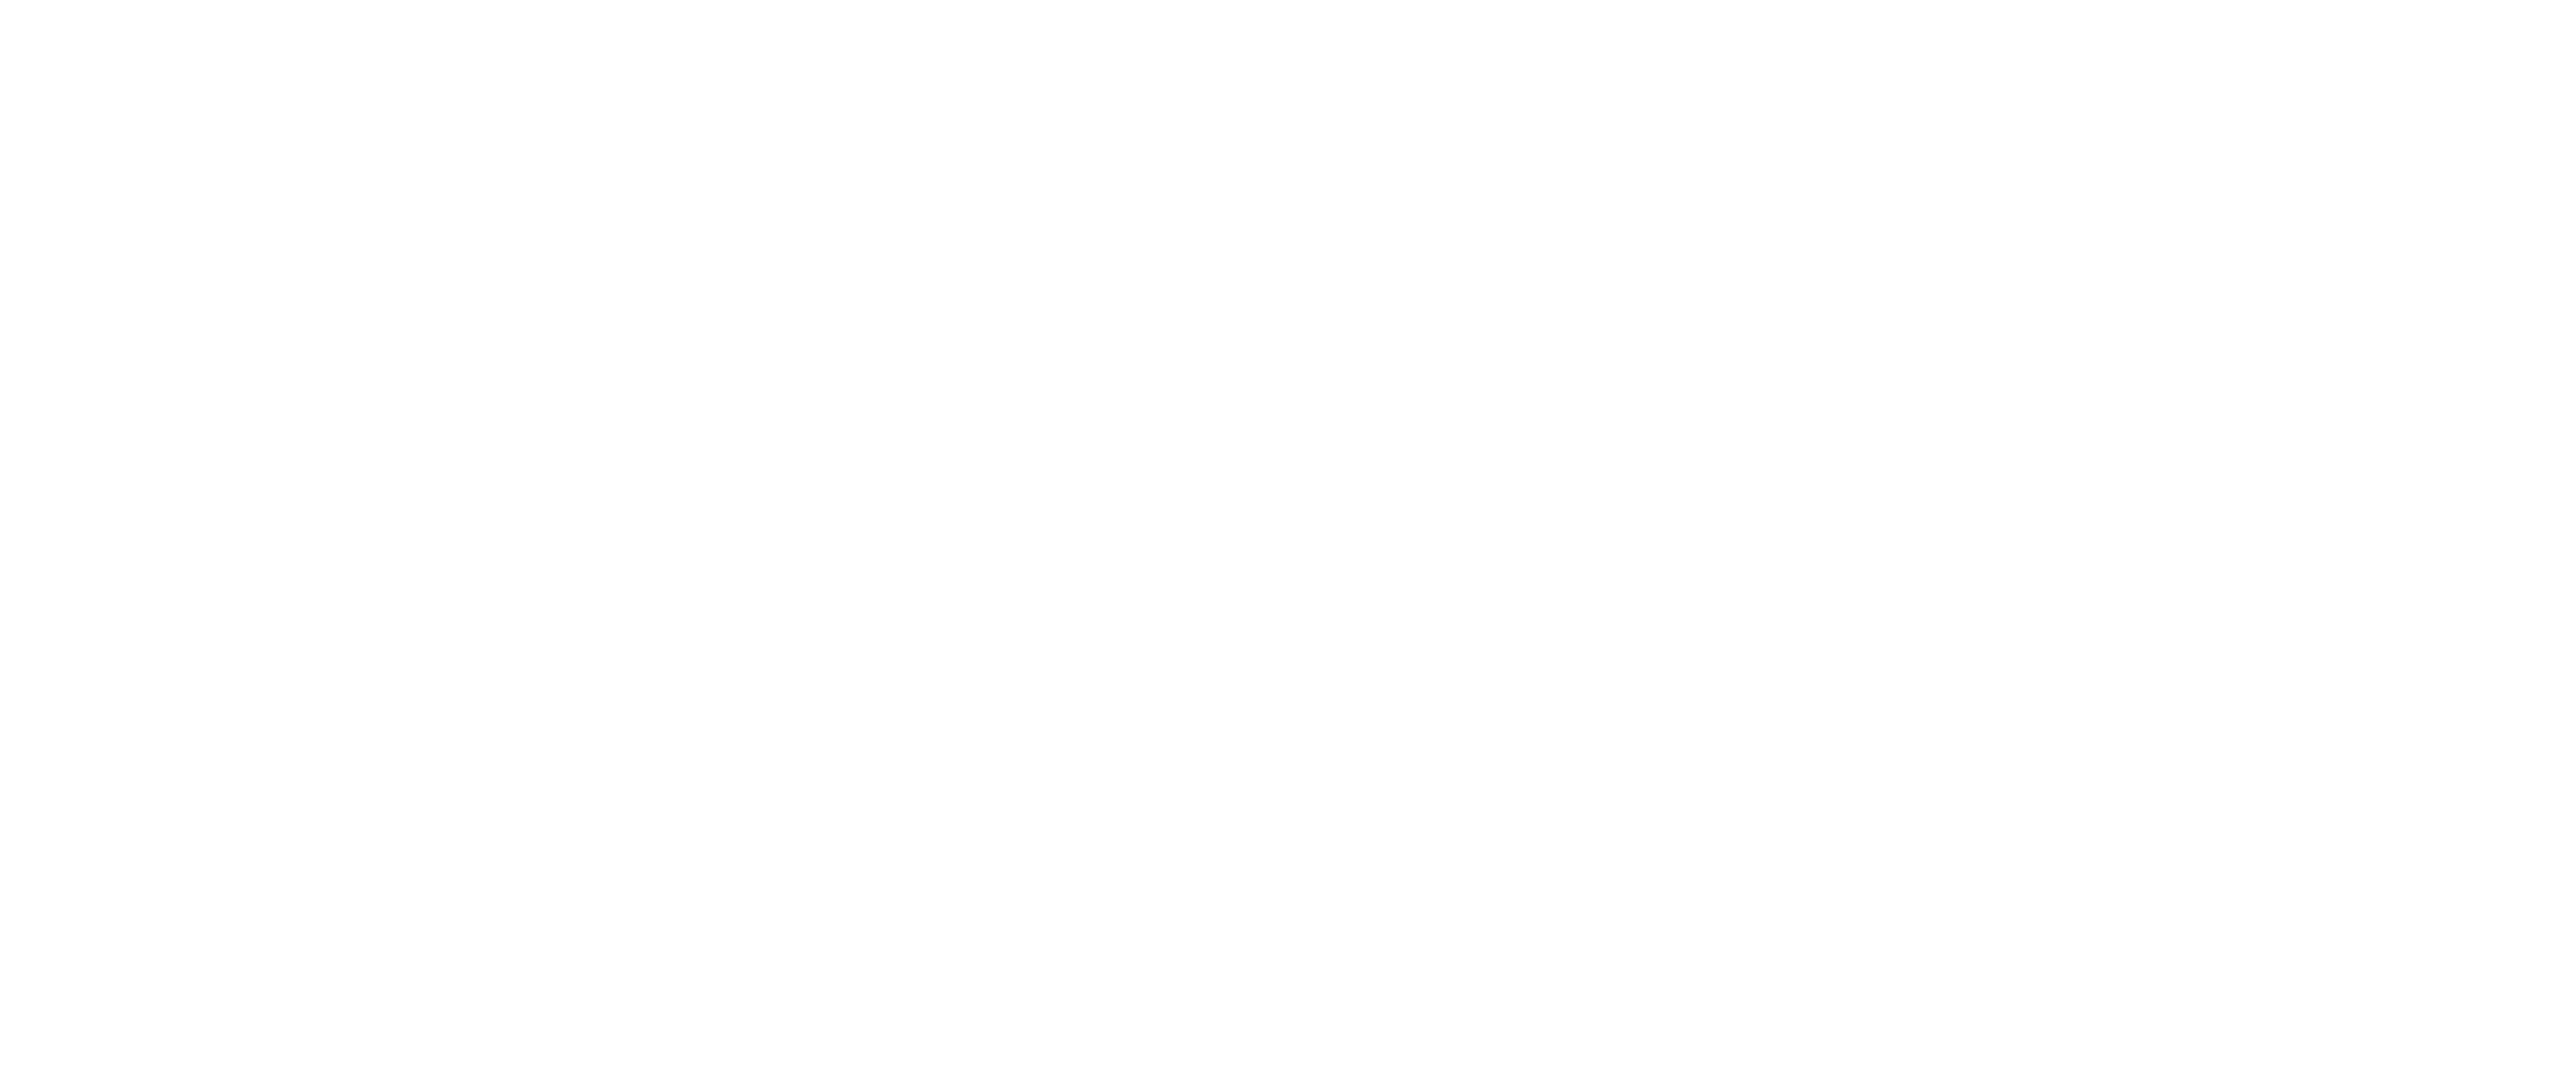 Poly Tool Design